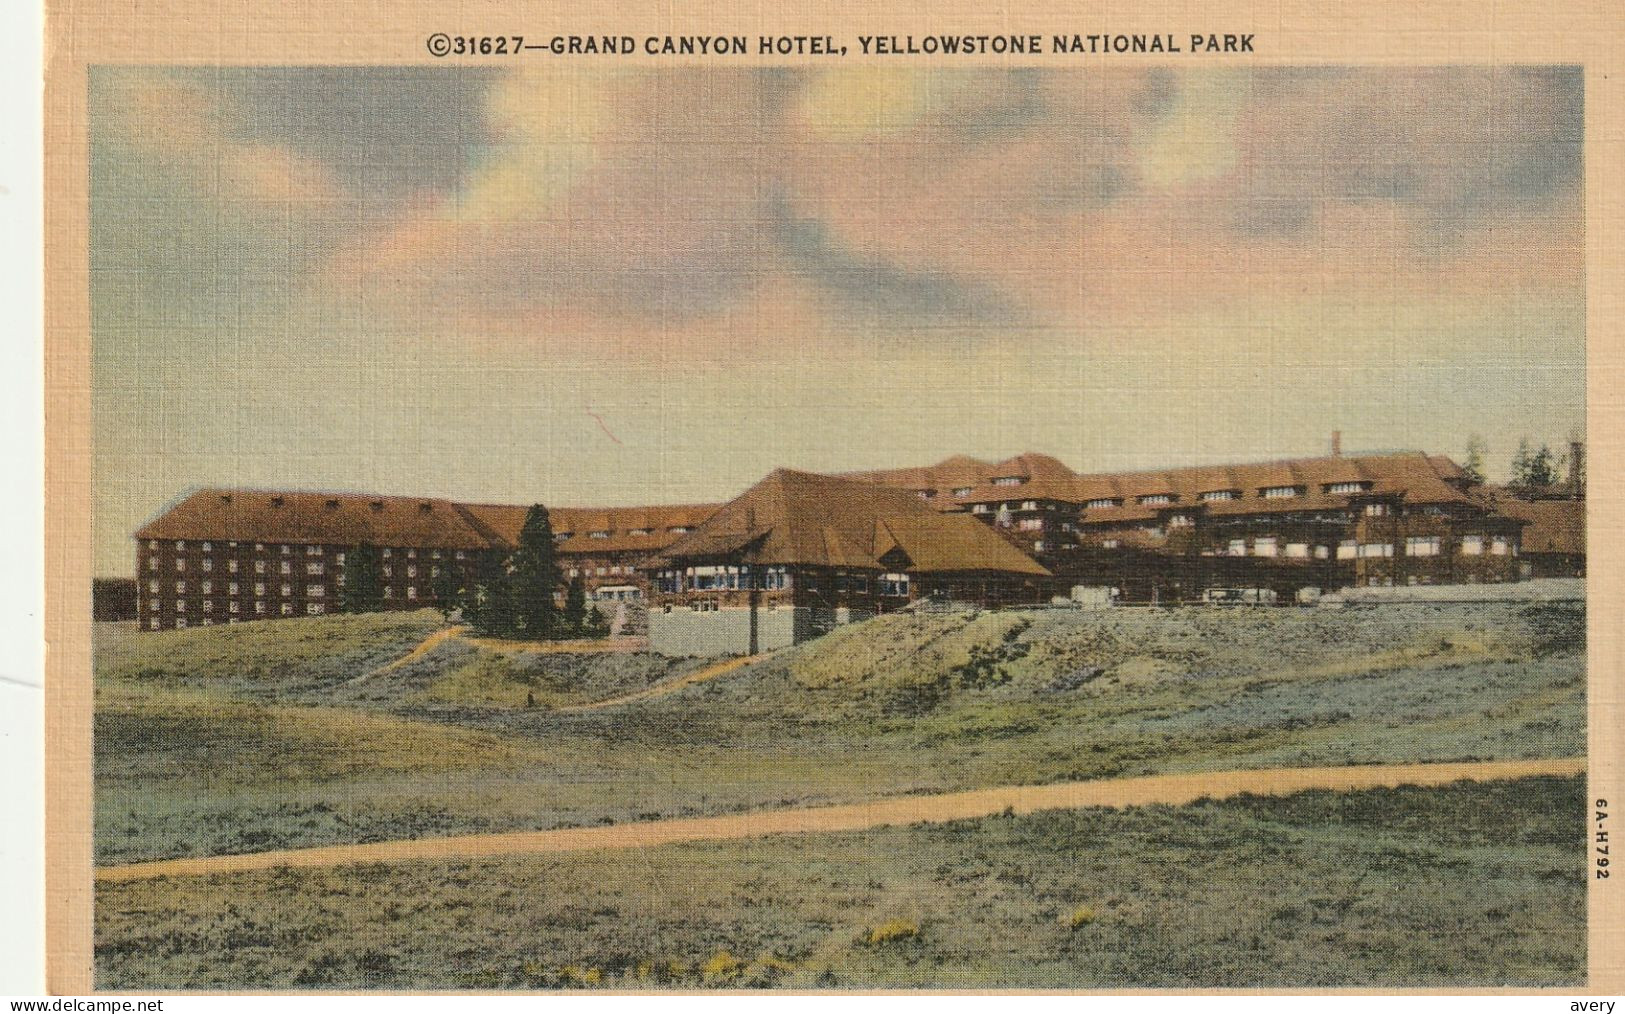 Grand Canyon Hotel, Yellowstone National Park, Wyoming - Yellowstone